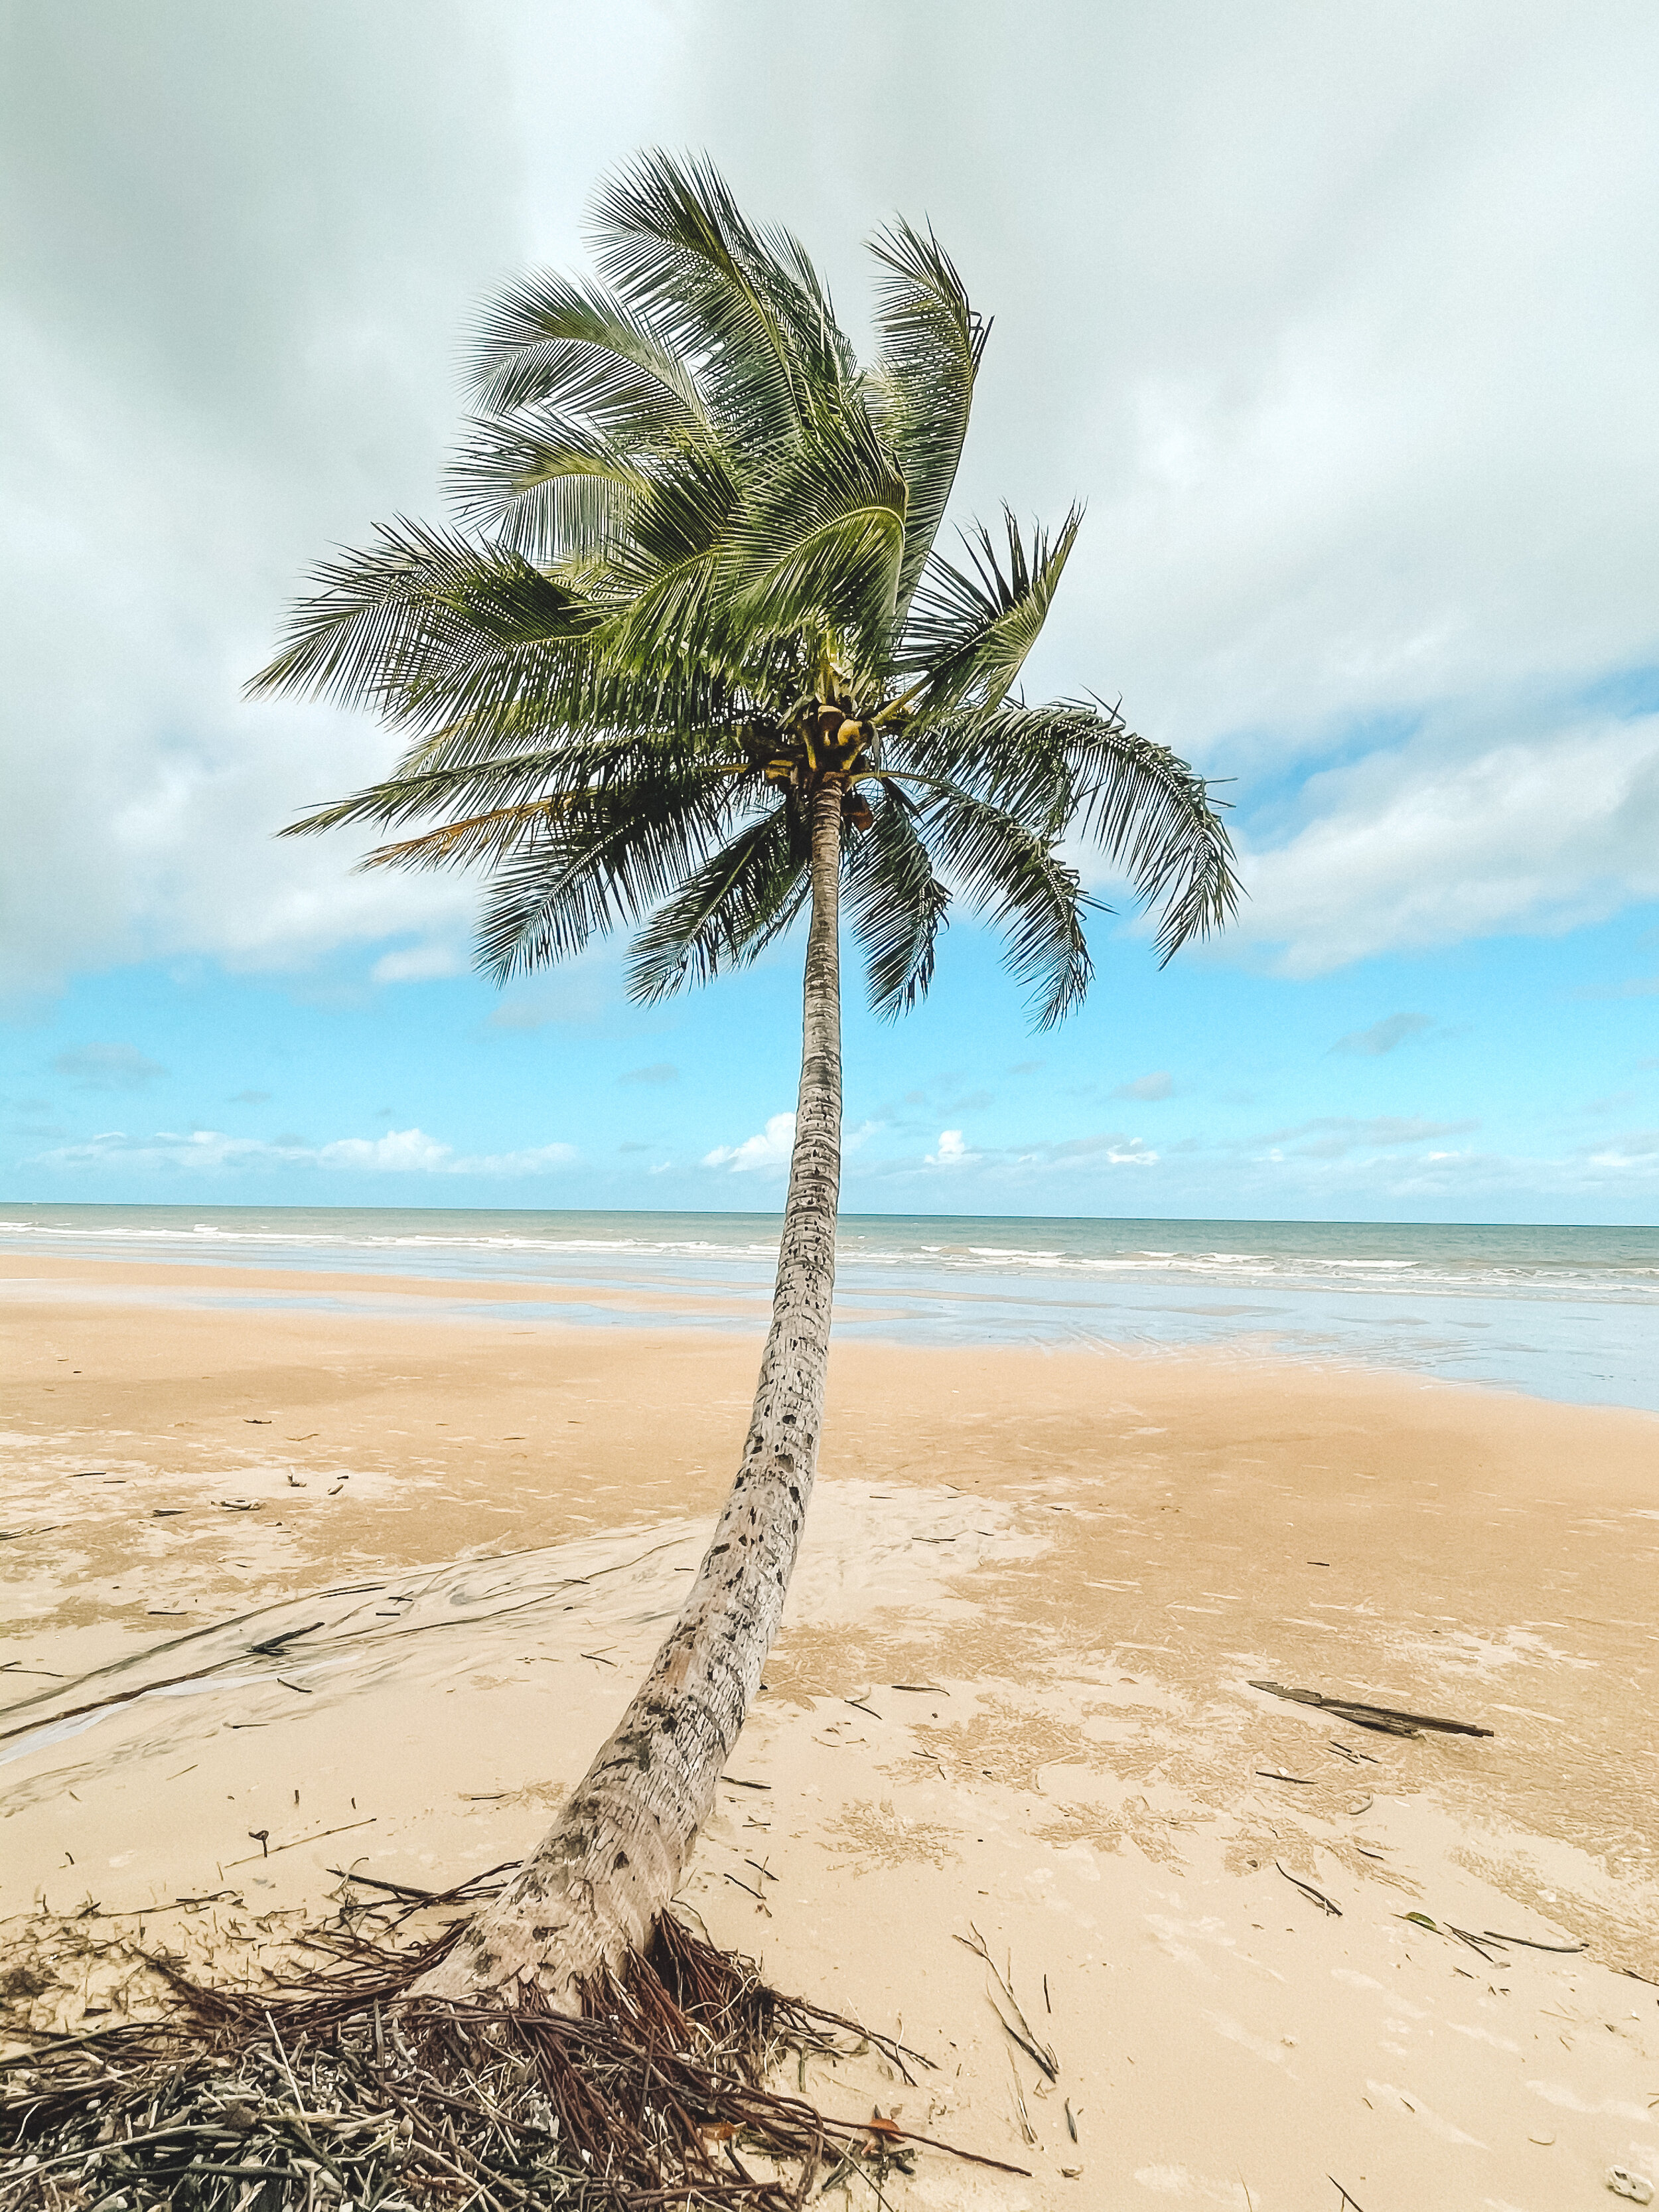 Palm Tree at Mission Beach - Tropical North Queensland (QLD) - Australia